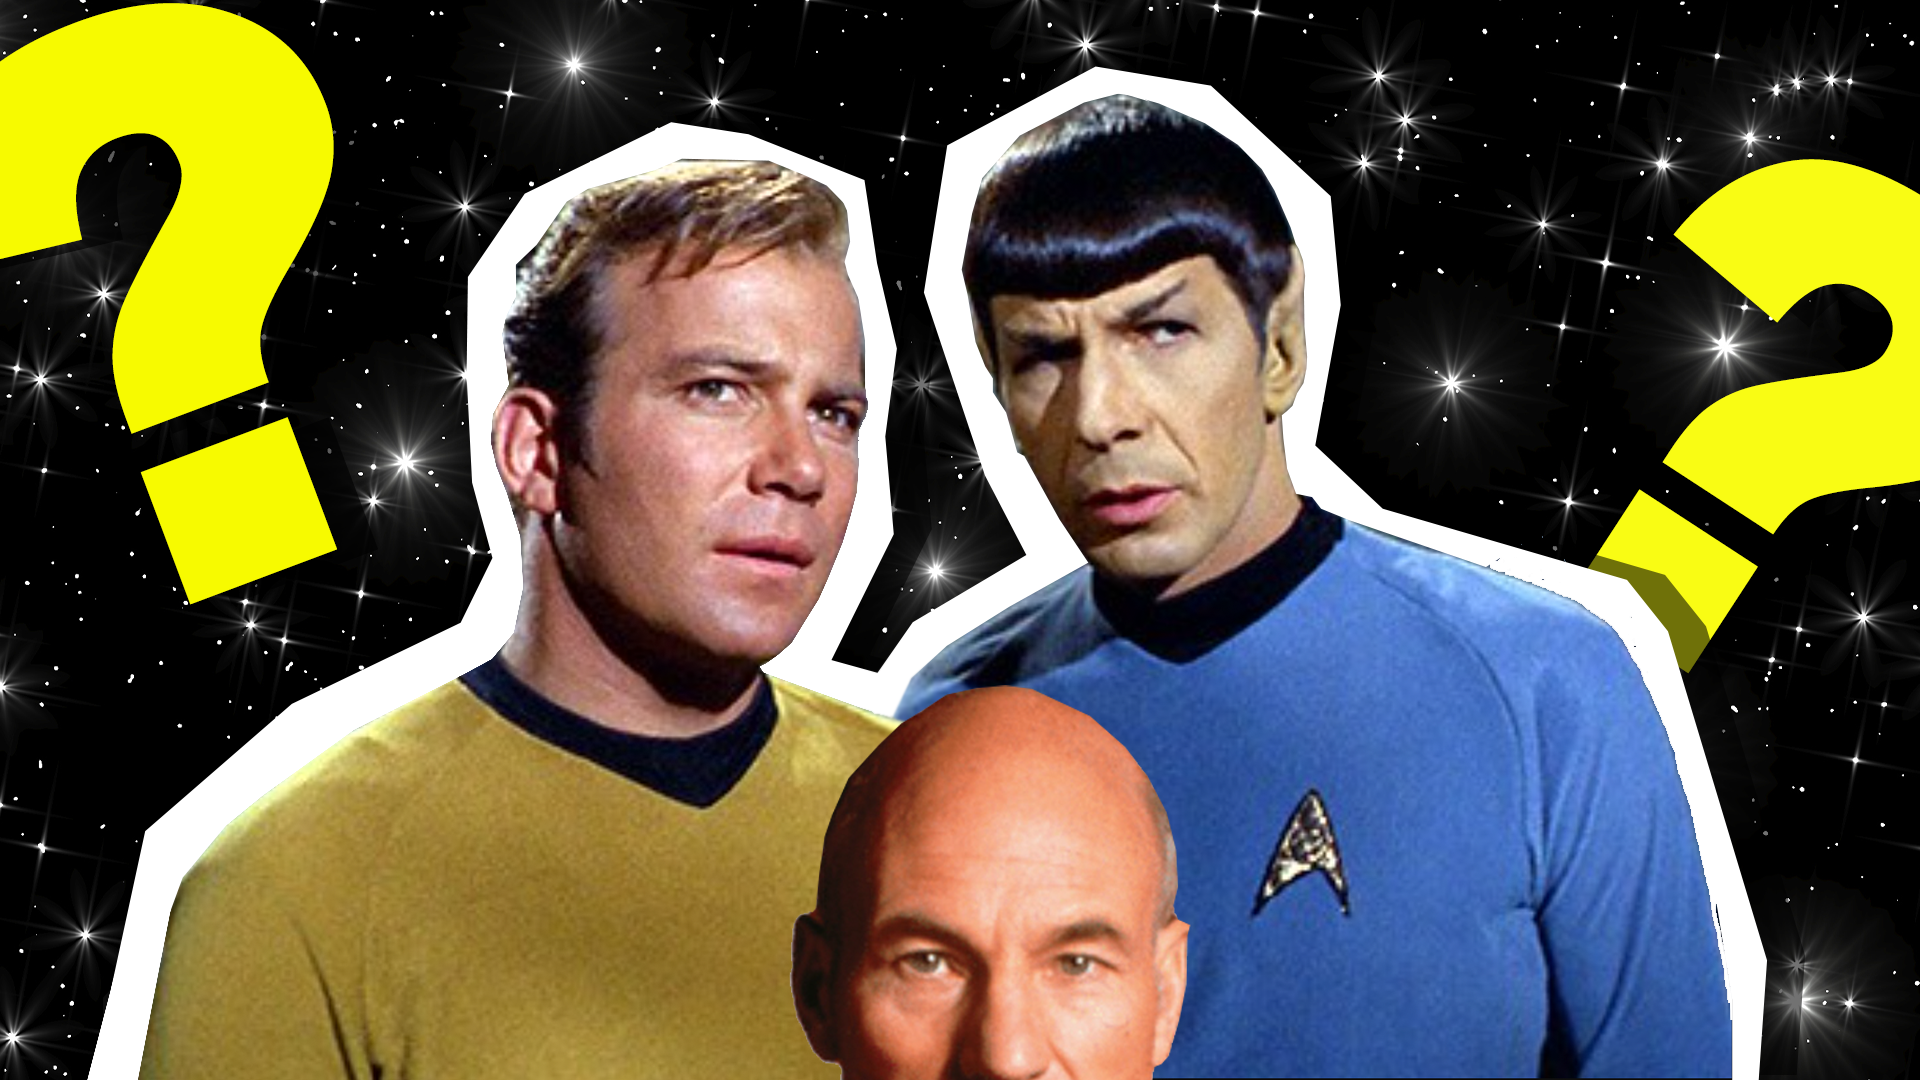 Kirk, Spock and Picard